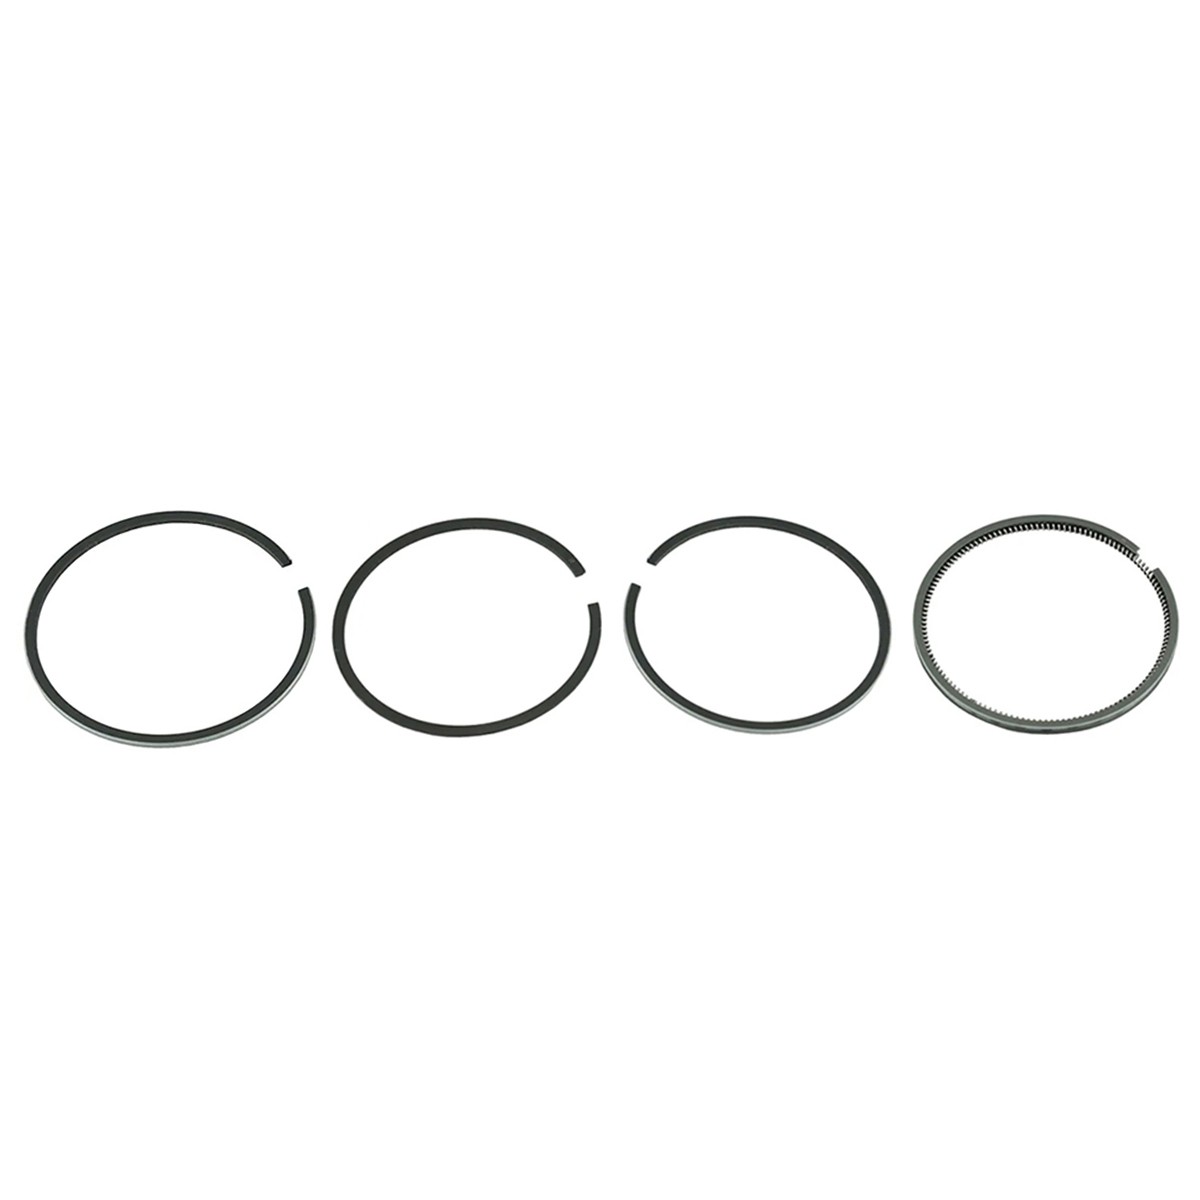 Piestne krúžky / Ø 92 mm / 2,50 x 2,00 x 2,00 x 4,50 mm / Hinomoto E23 / Toyosha P126 / 2201-9110-000